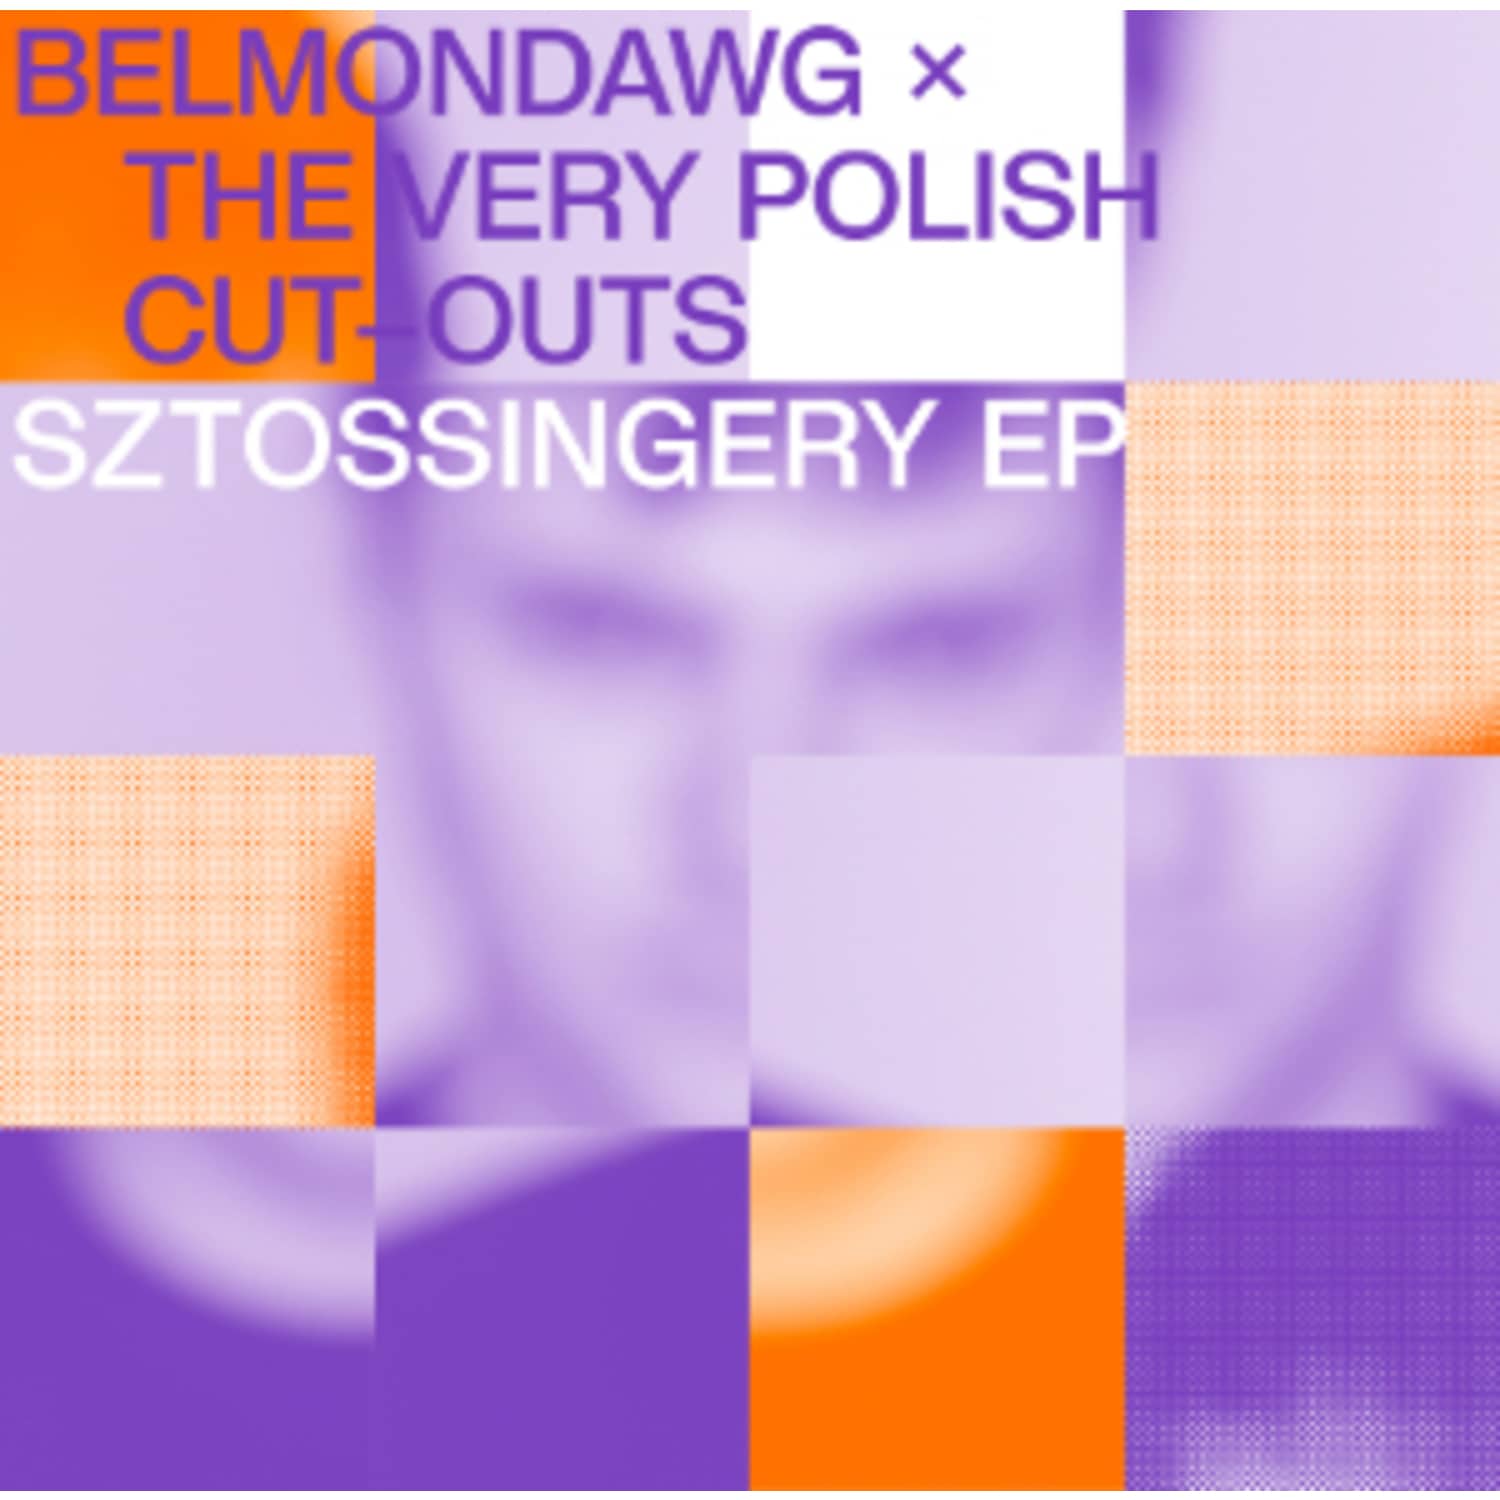 Belmondawg X The Very Polish Cut-cuts - SZTOSSINGERY EP